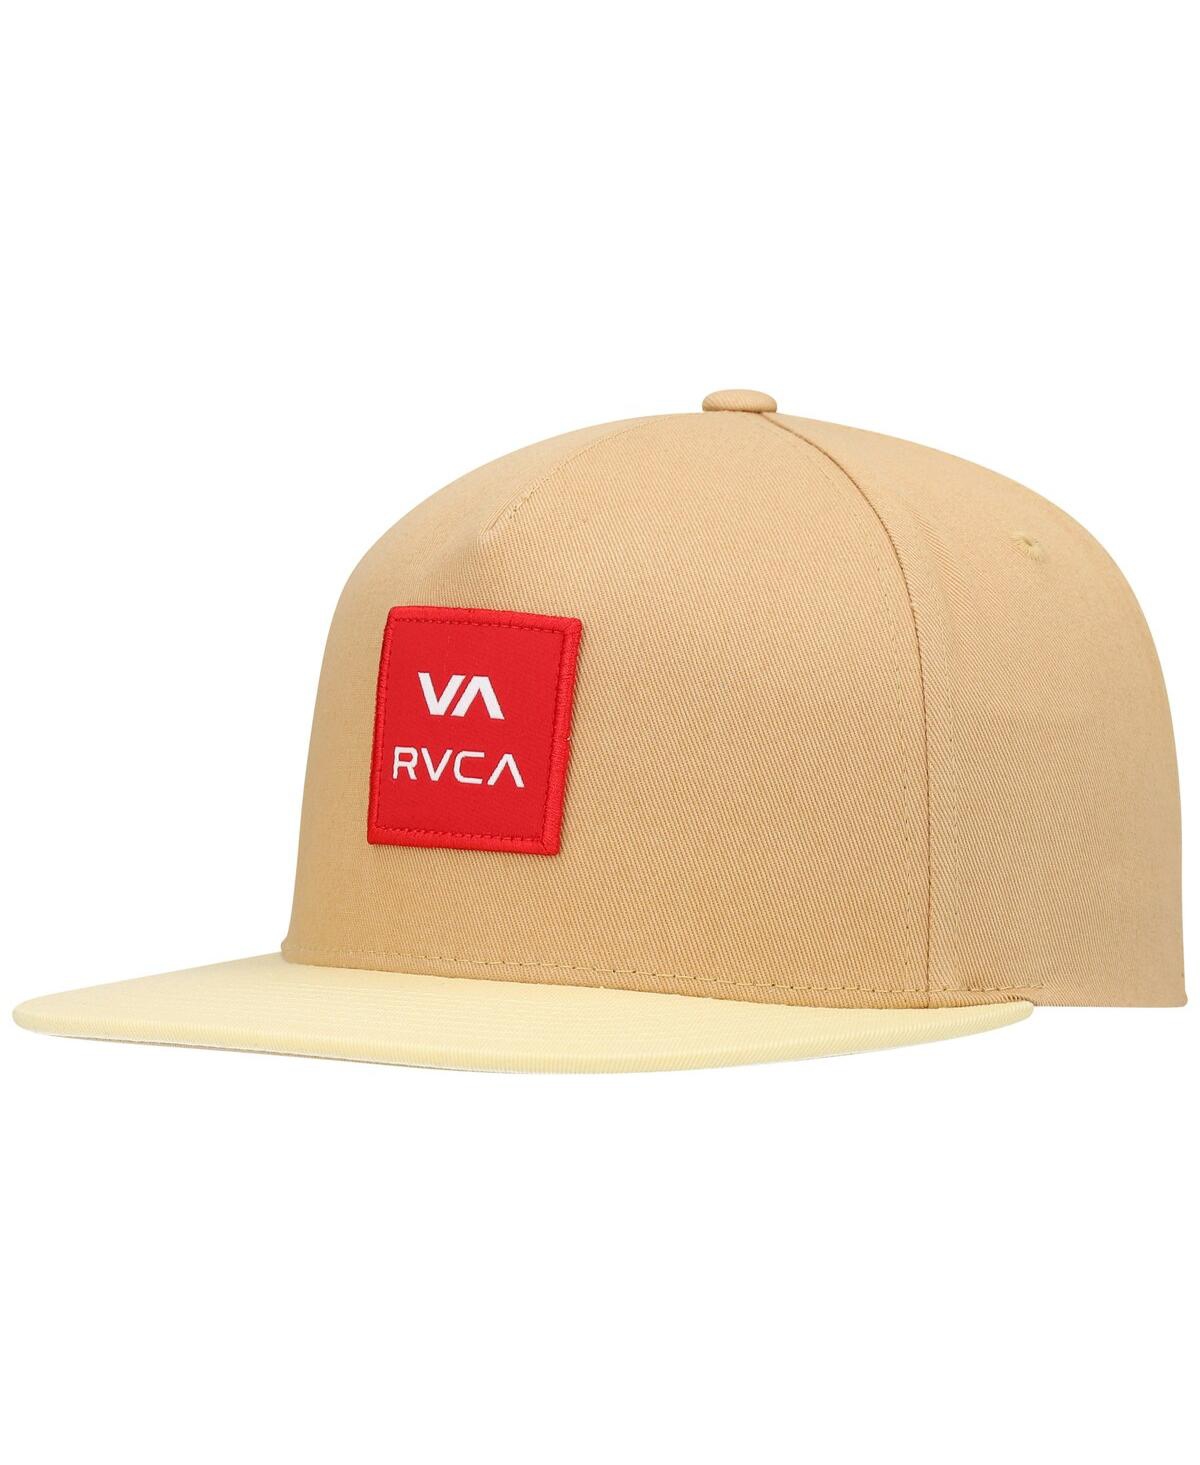 Rvca Men's  Gold Square Snapback Hat